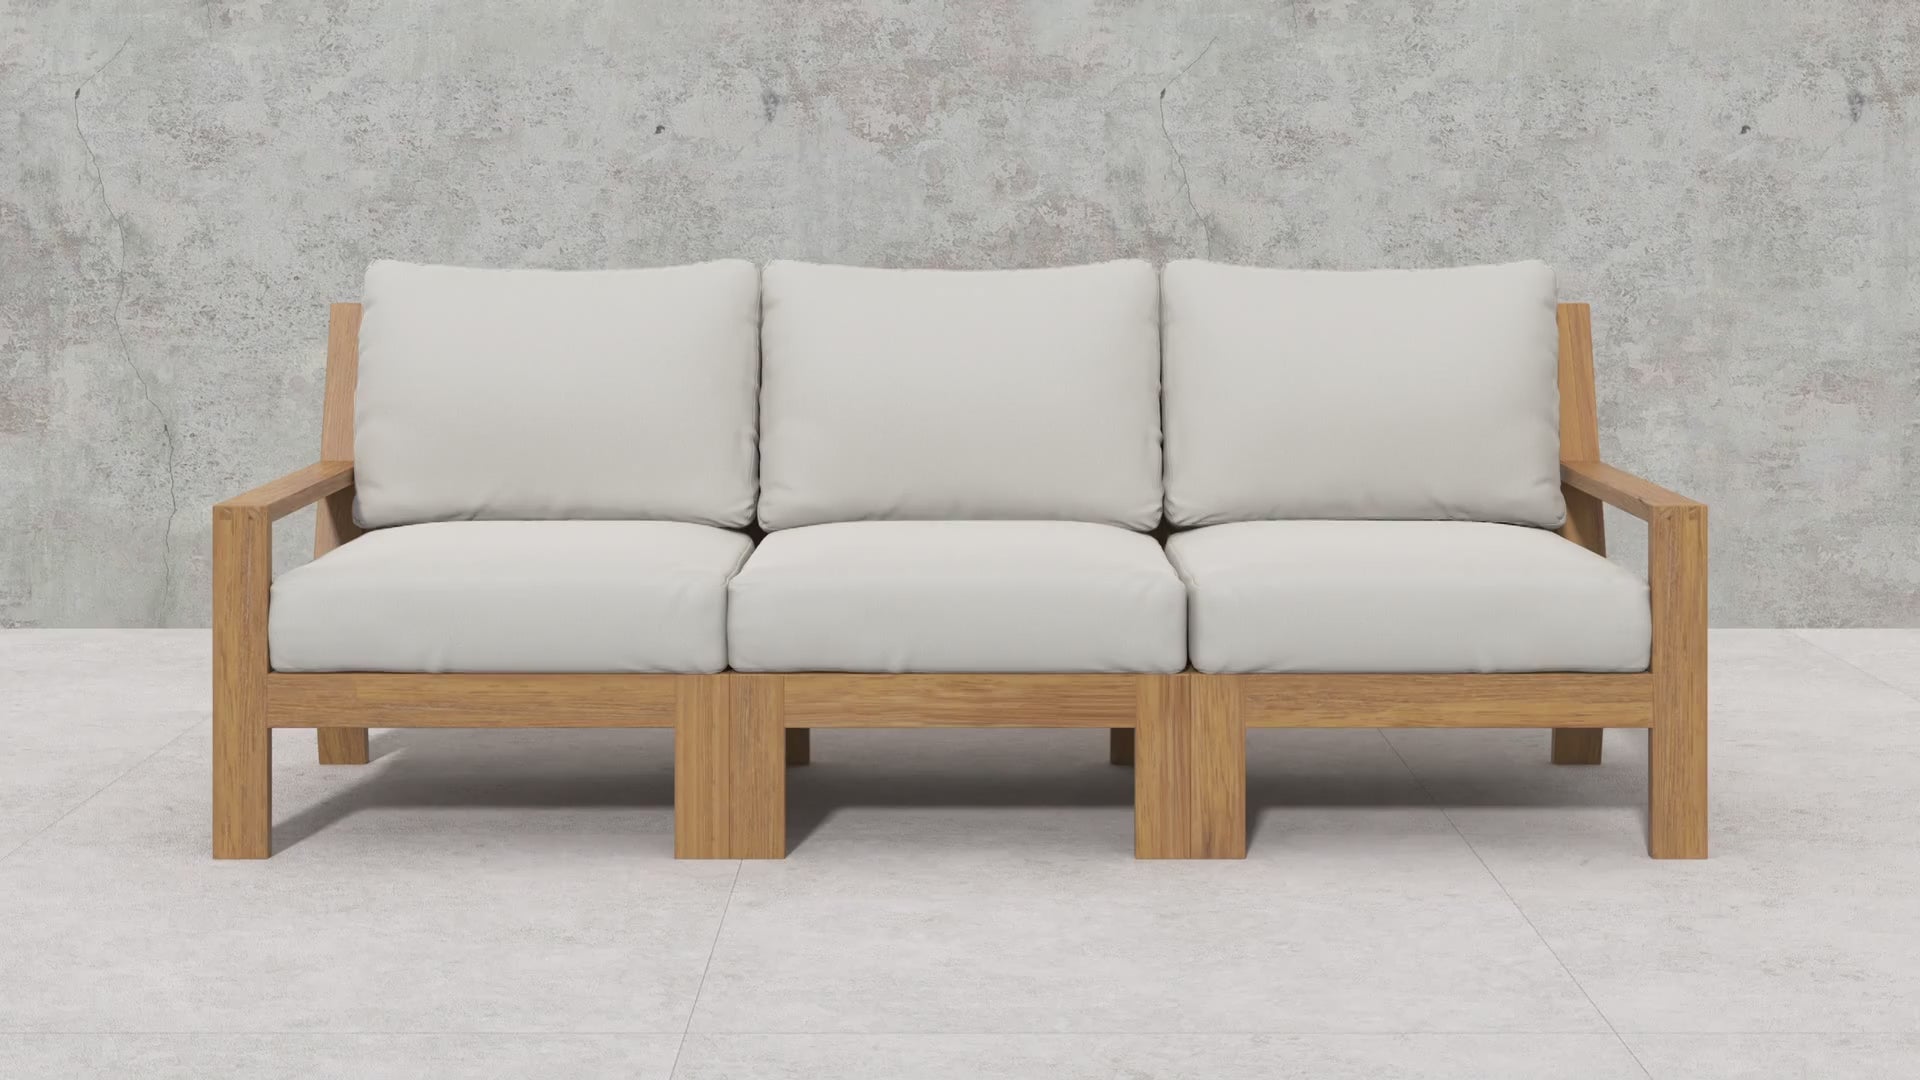 Most Comfortable Modular Sofa For Patio